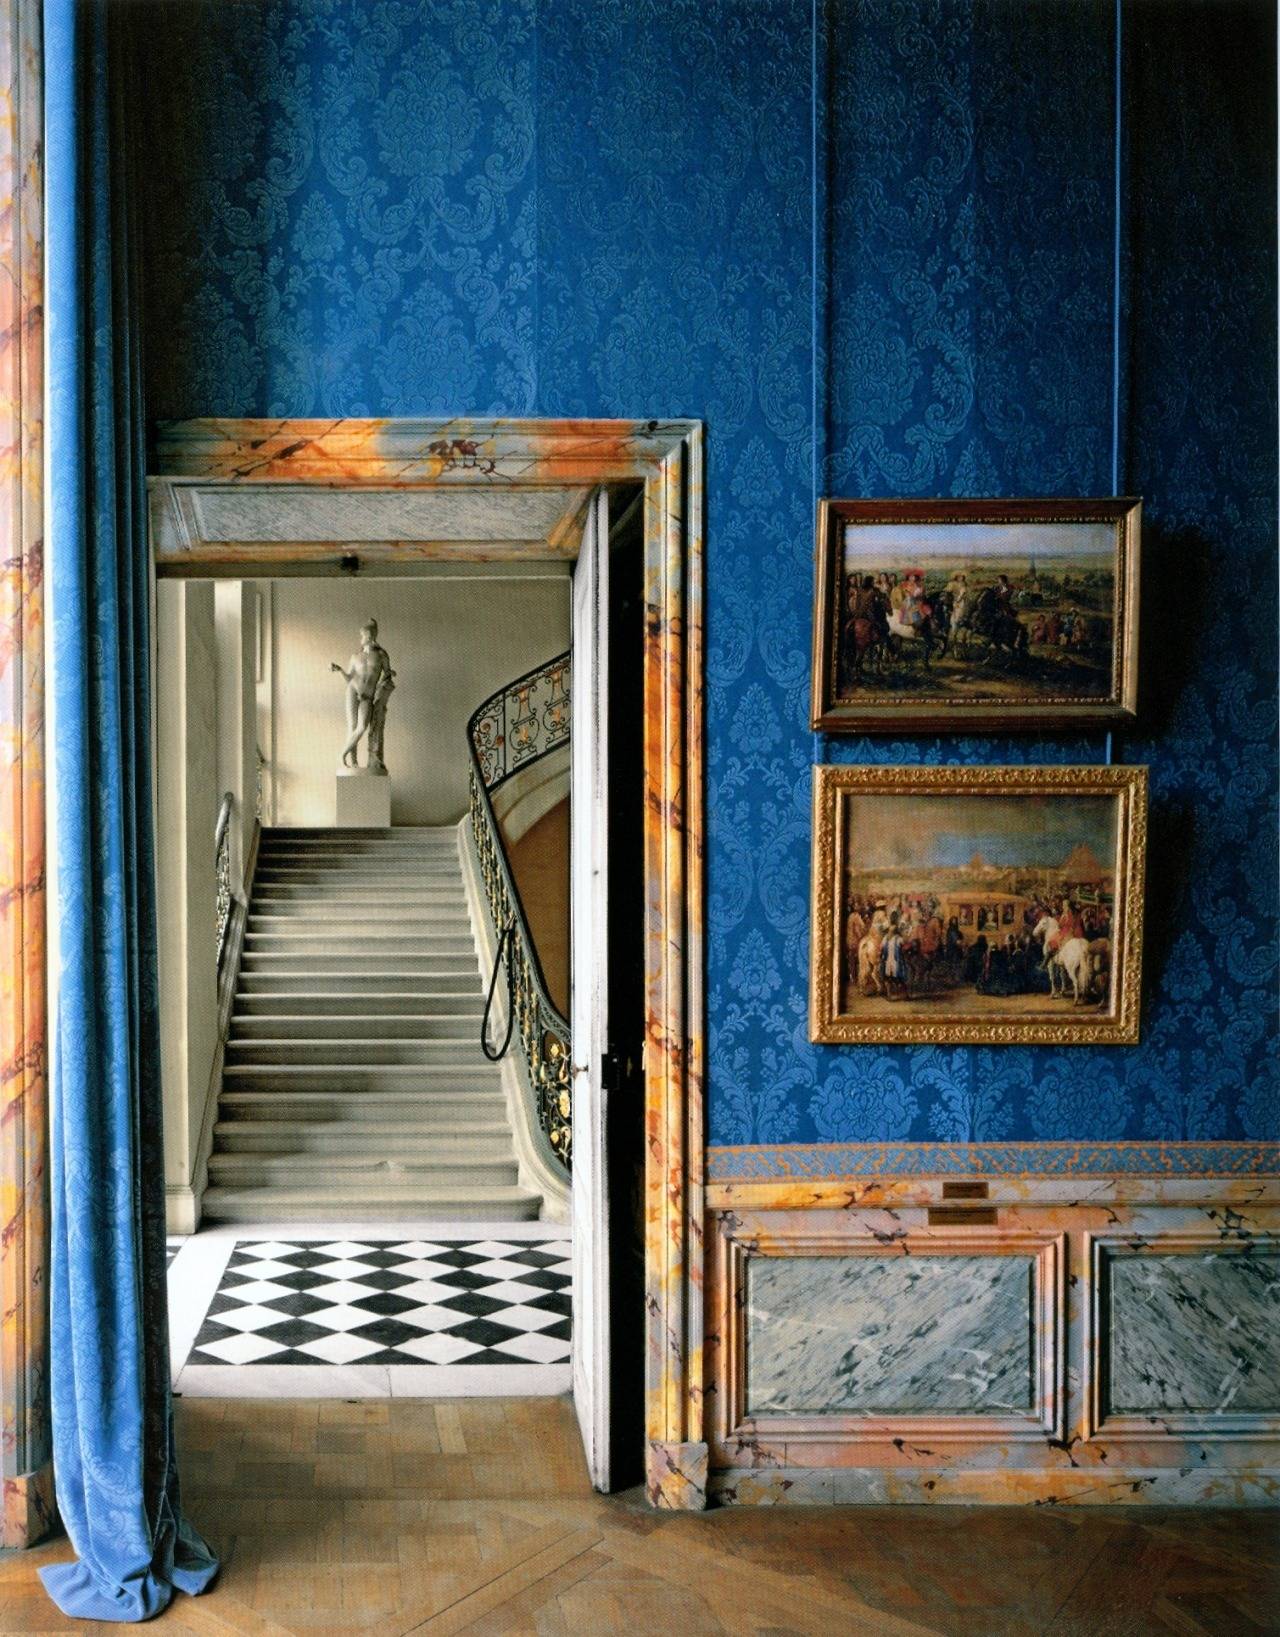 Salles du XVII, Versailles France